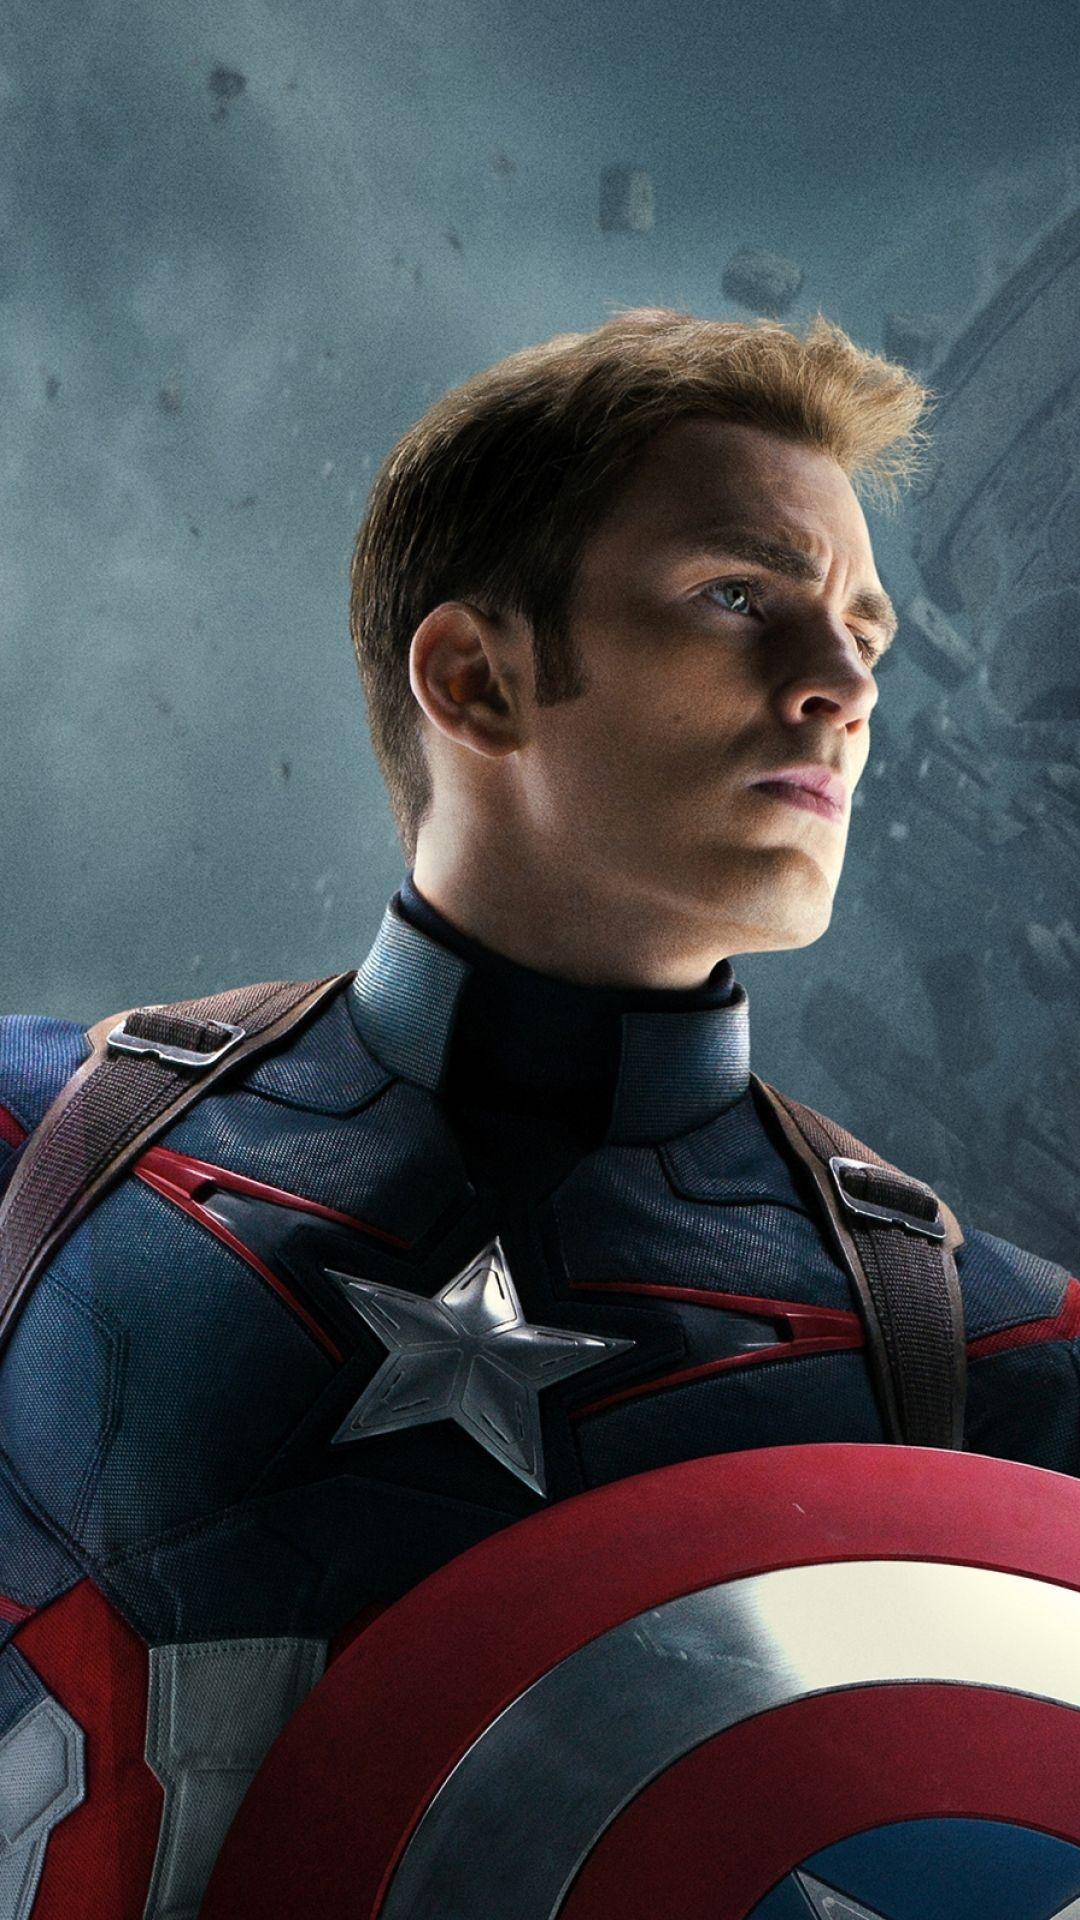 Captain America. Captain america wallpaper, Captain america trilogy, Captain america